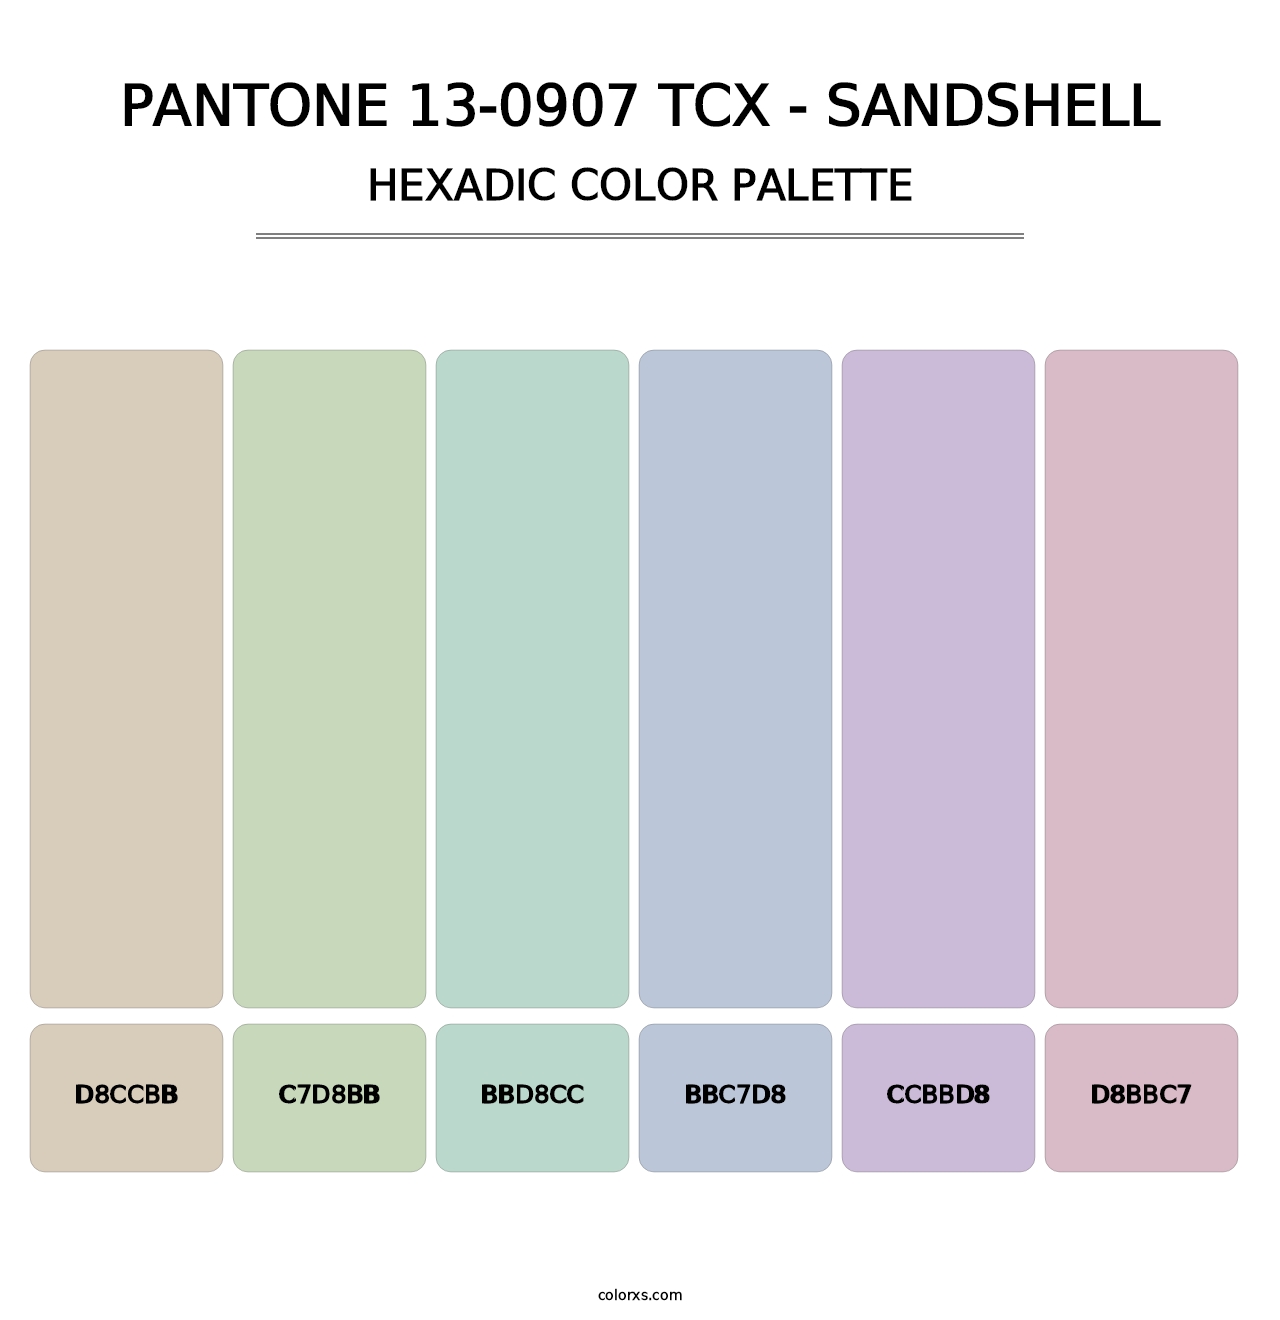 PANTONE 13-0907 TCX - Sandshell - Hexadic Color Palette